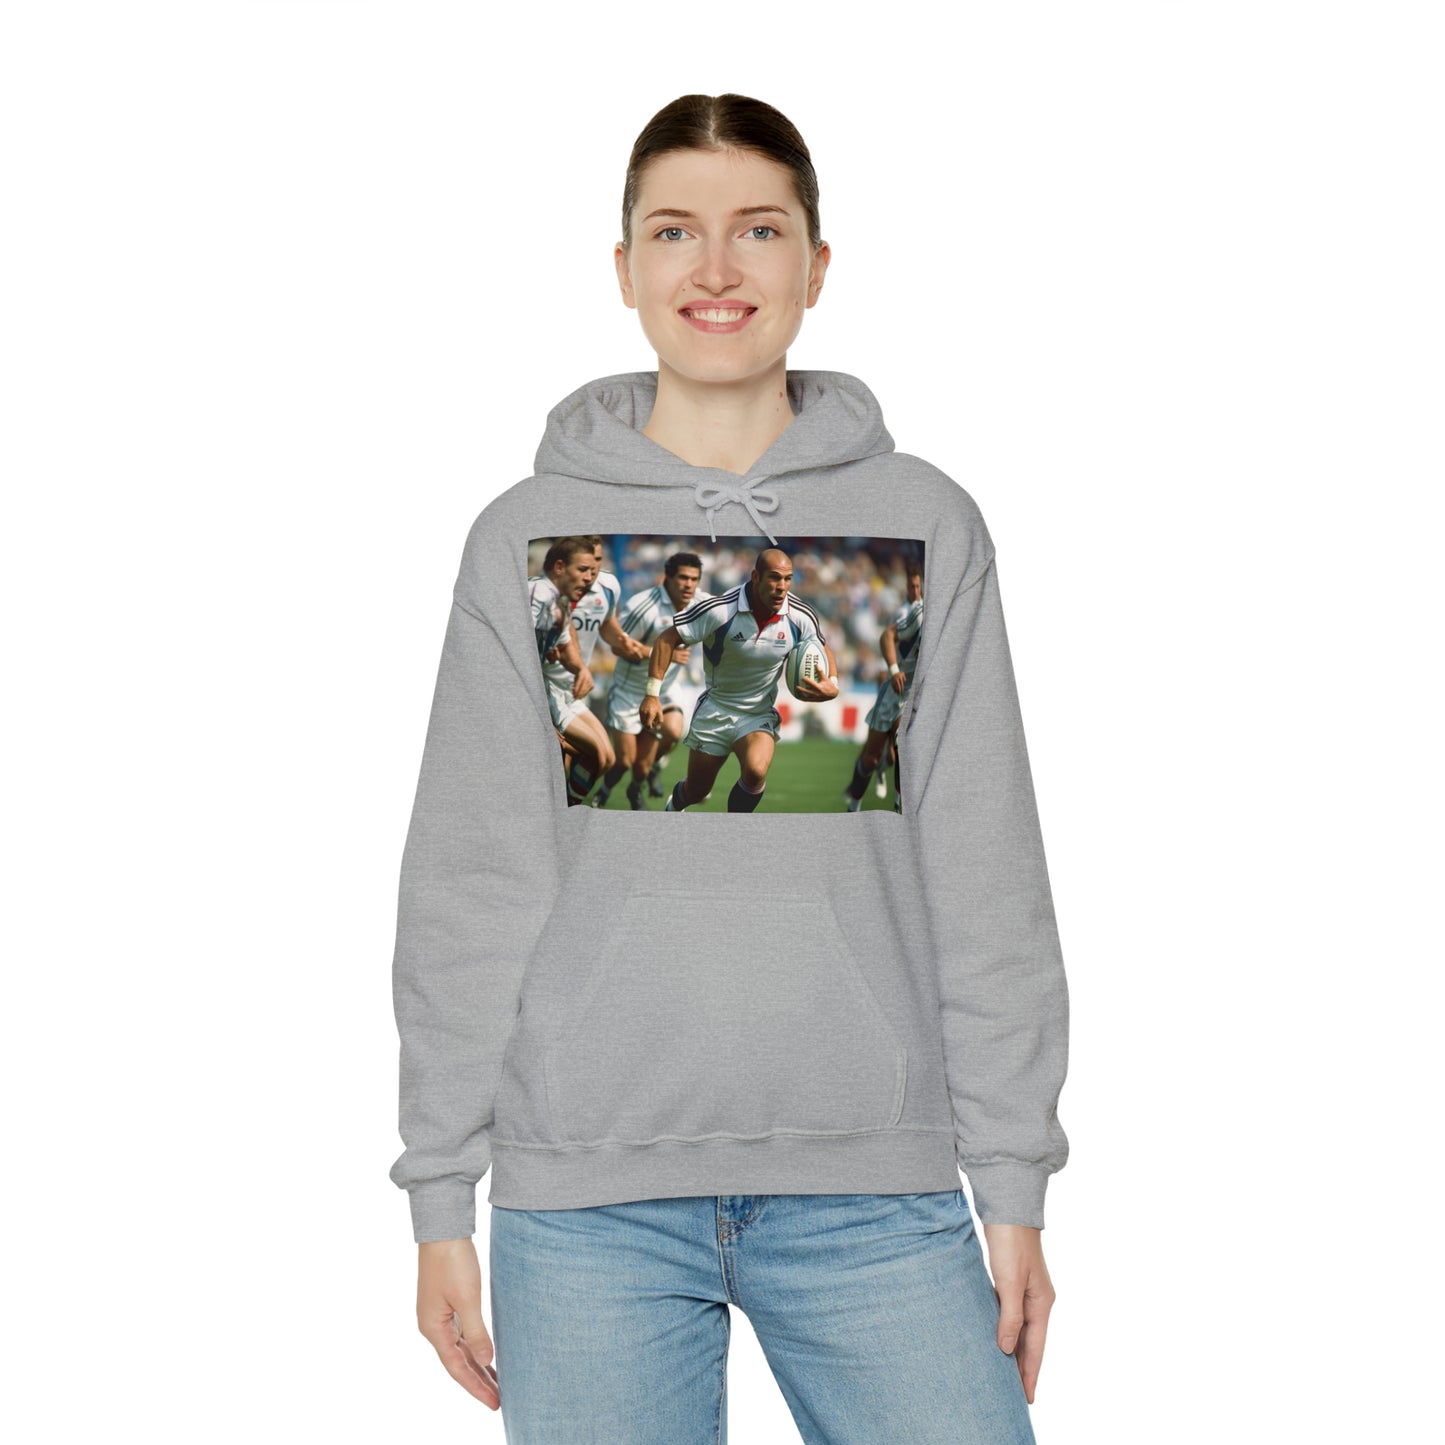 Zinedine Zidane - light hoodies